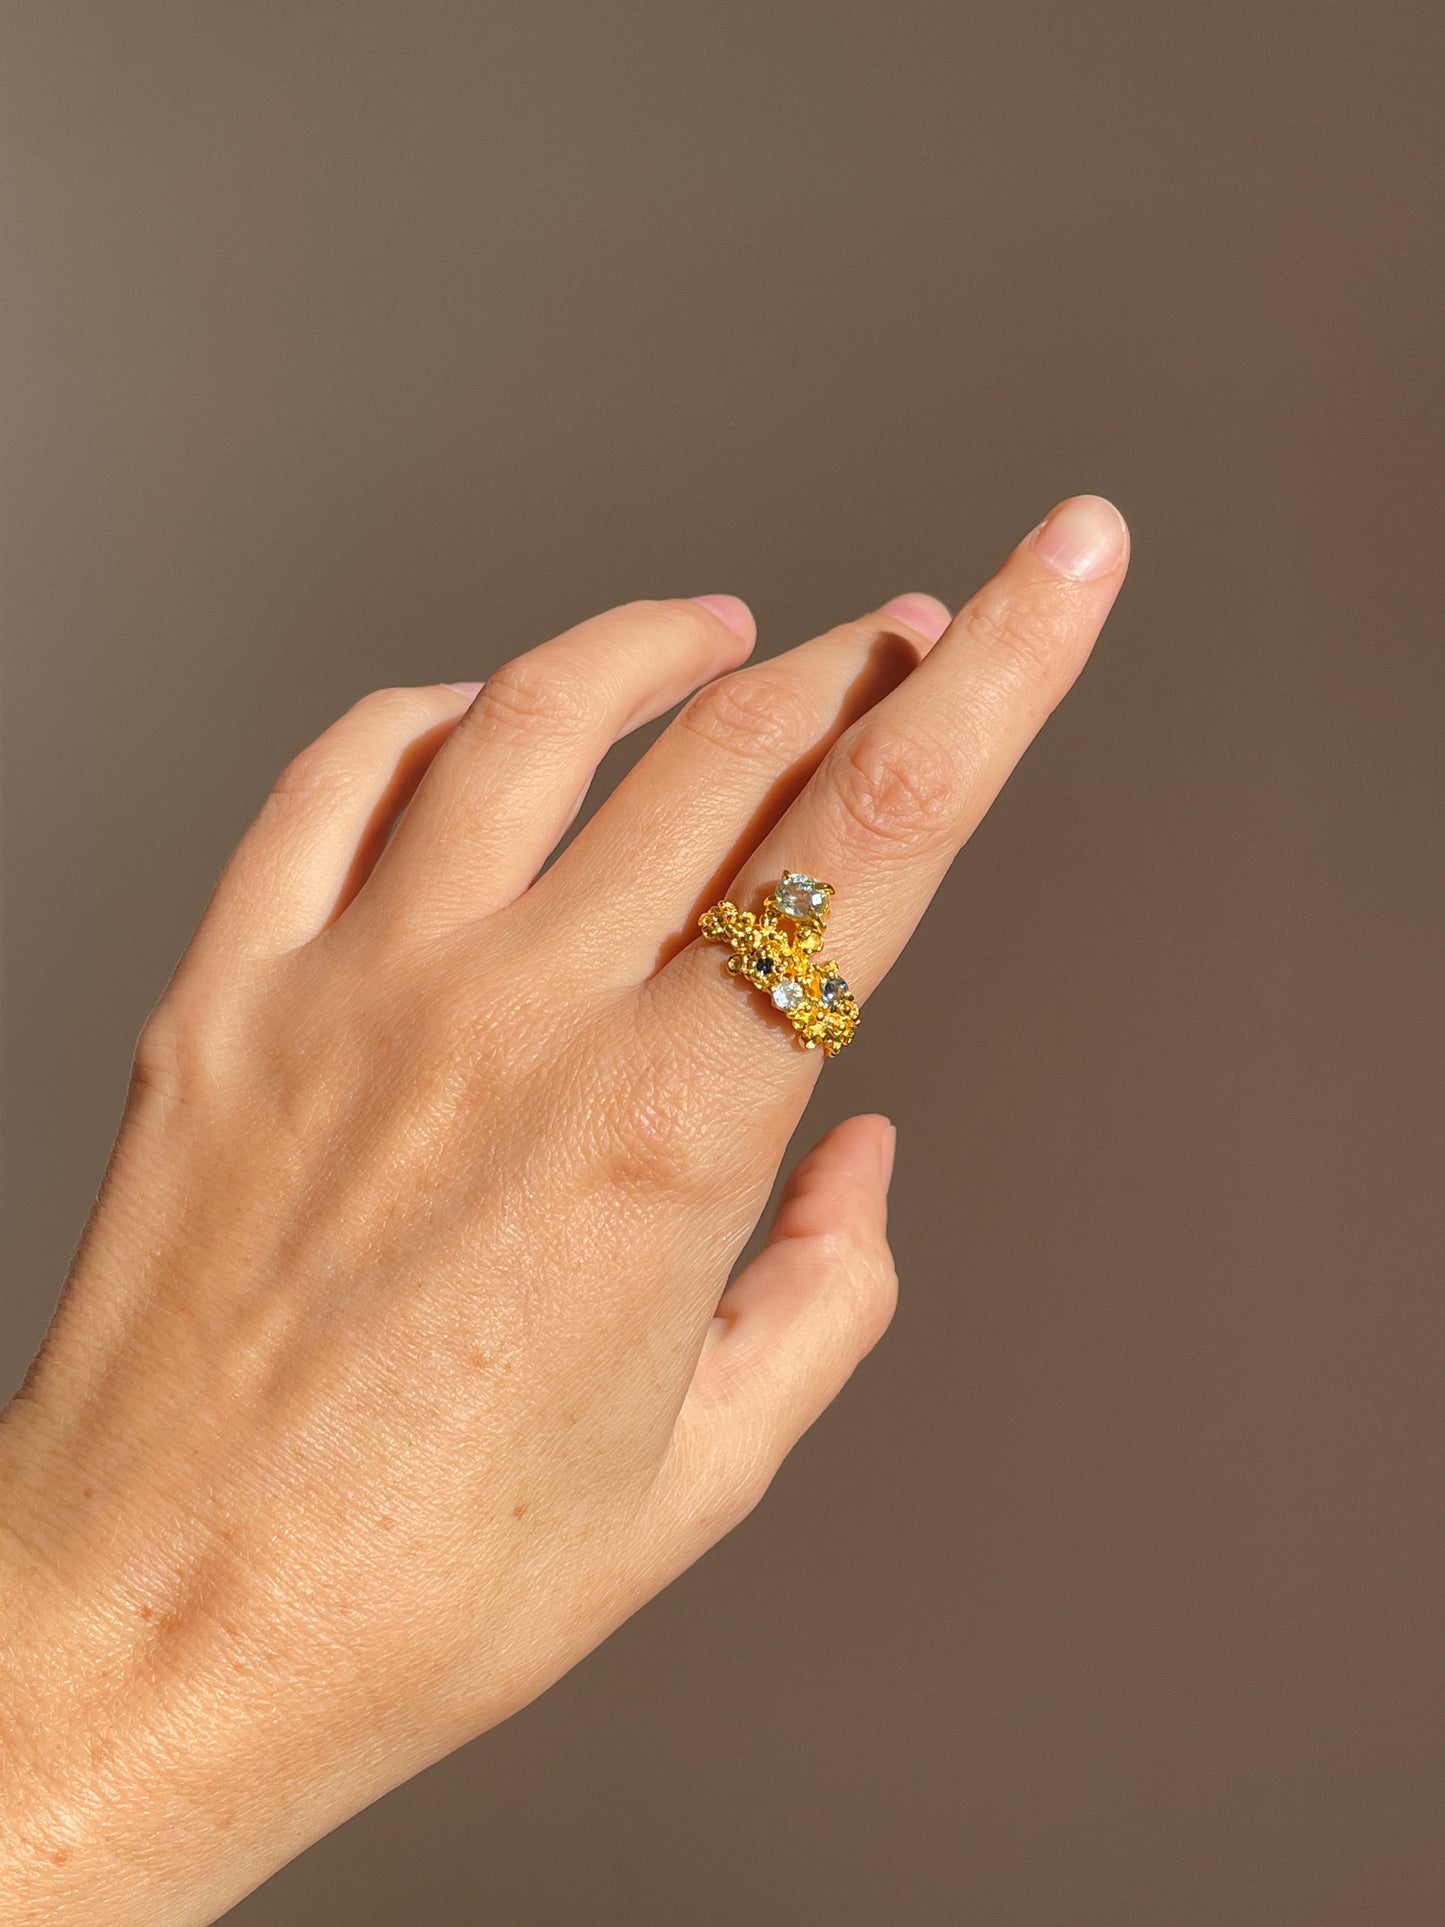 Coral Ring Gold with Aqua coloured sapphires & Aquamarine stones - size 7.5